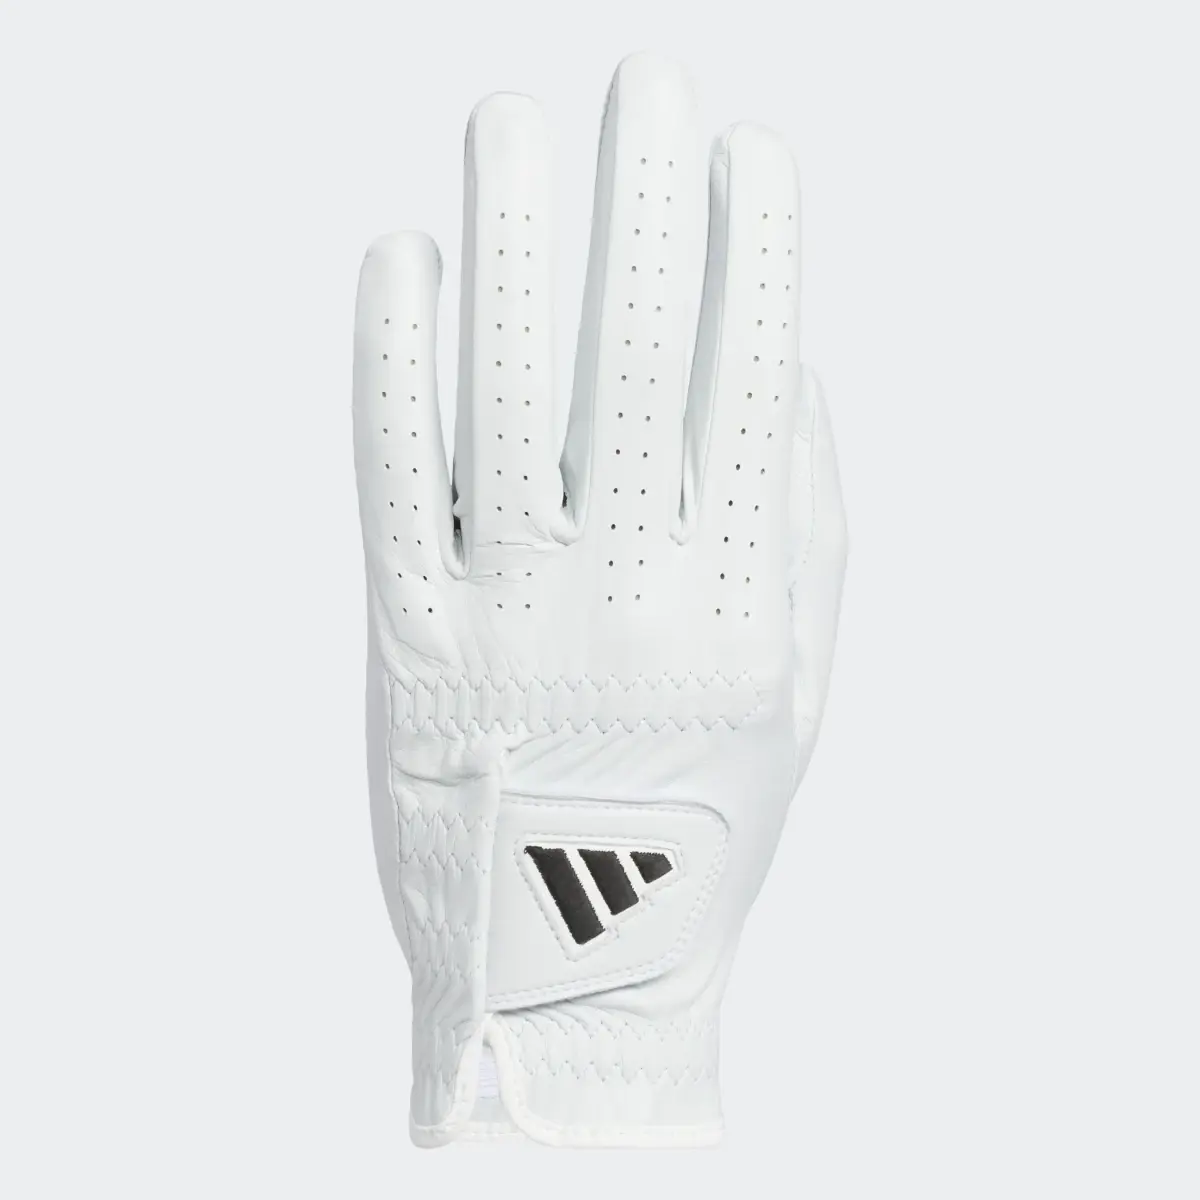 Adidas Ultimate Single Leather Golf Glove. 2